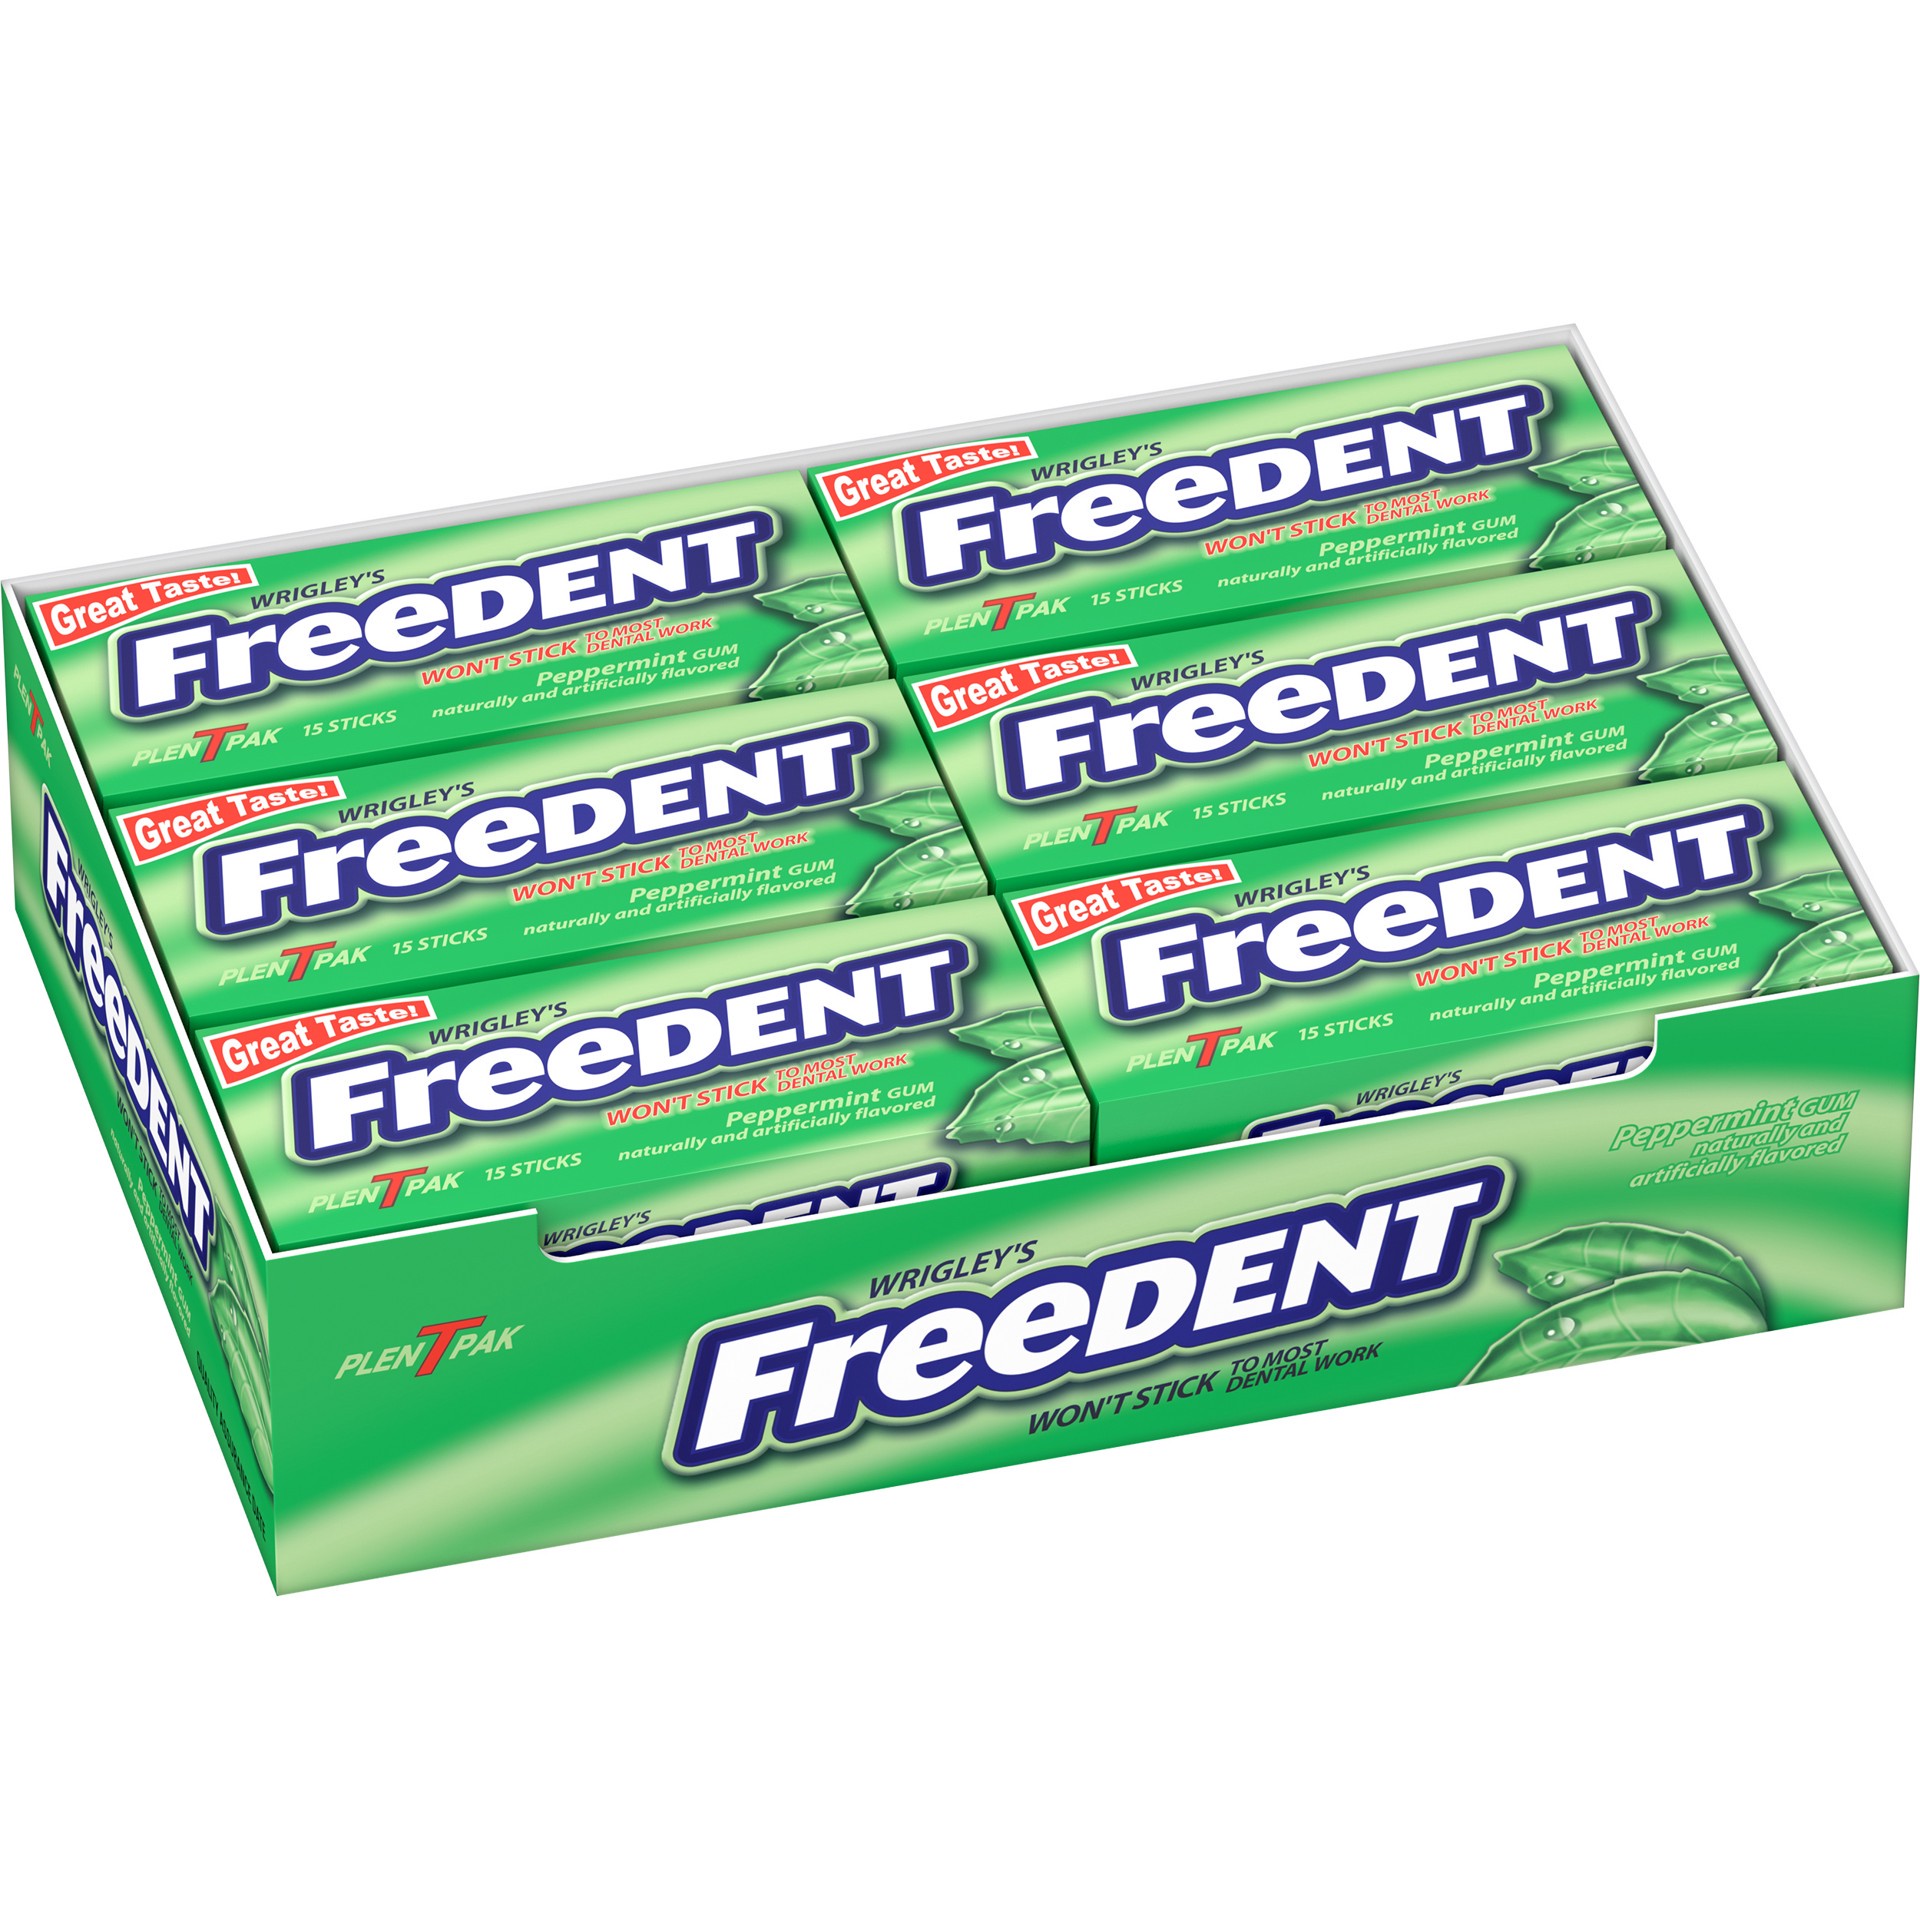 slide 1 of 5, Freedent WRIGLEY'S FREEDENT Peppermint Gum, 15-Stick Pack (12 Packs), 180 pc